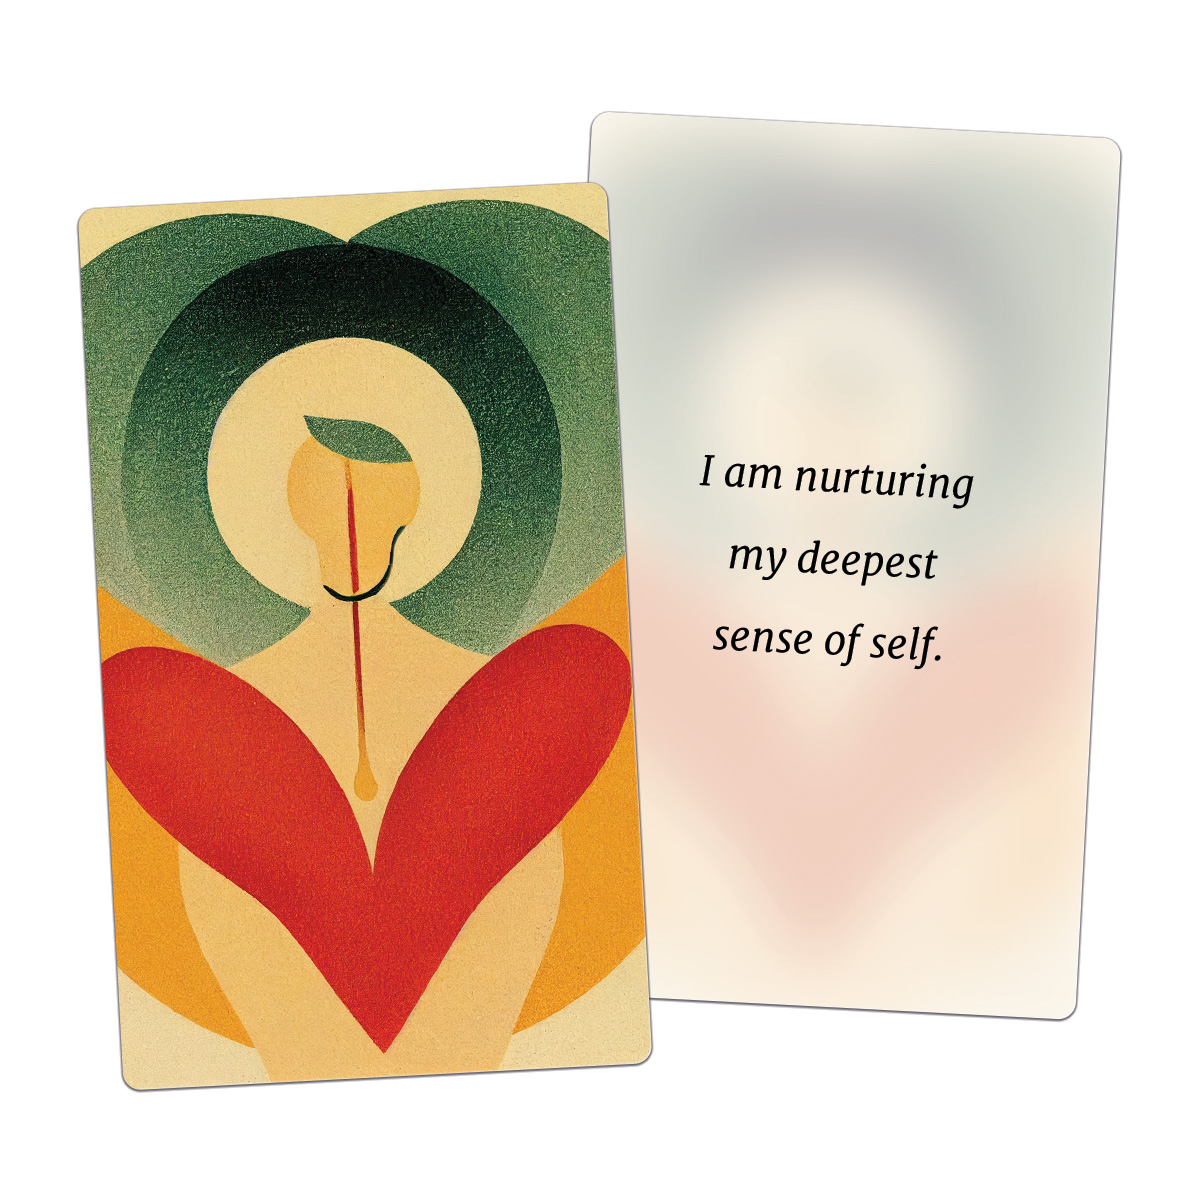 I am nurturing my deepest sense of self. (AFFIRMATION CARD)